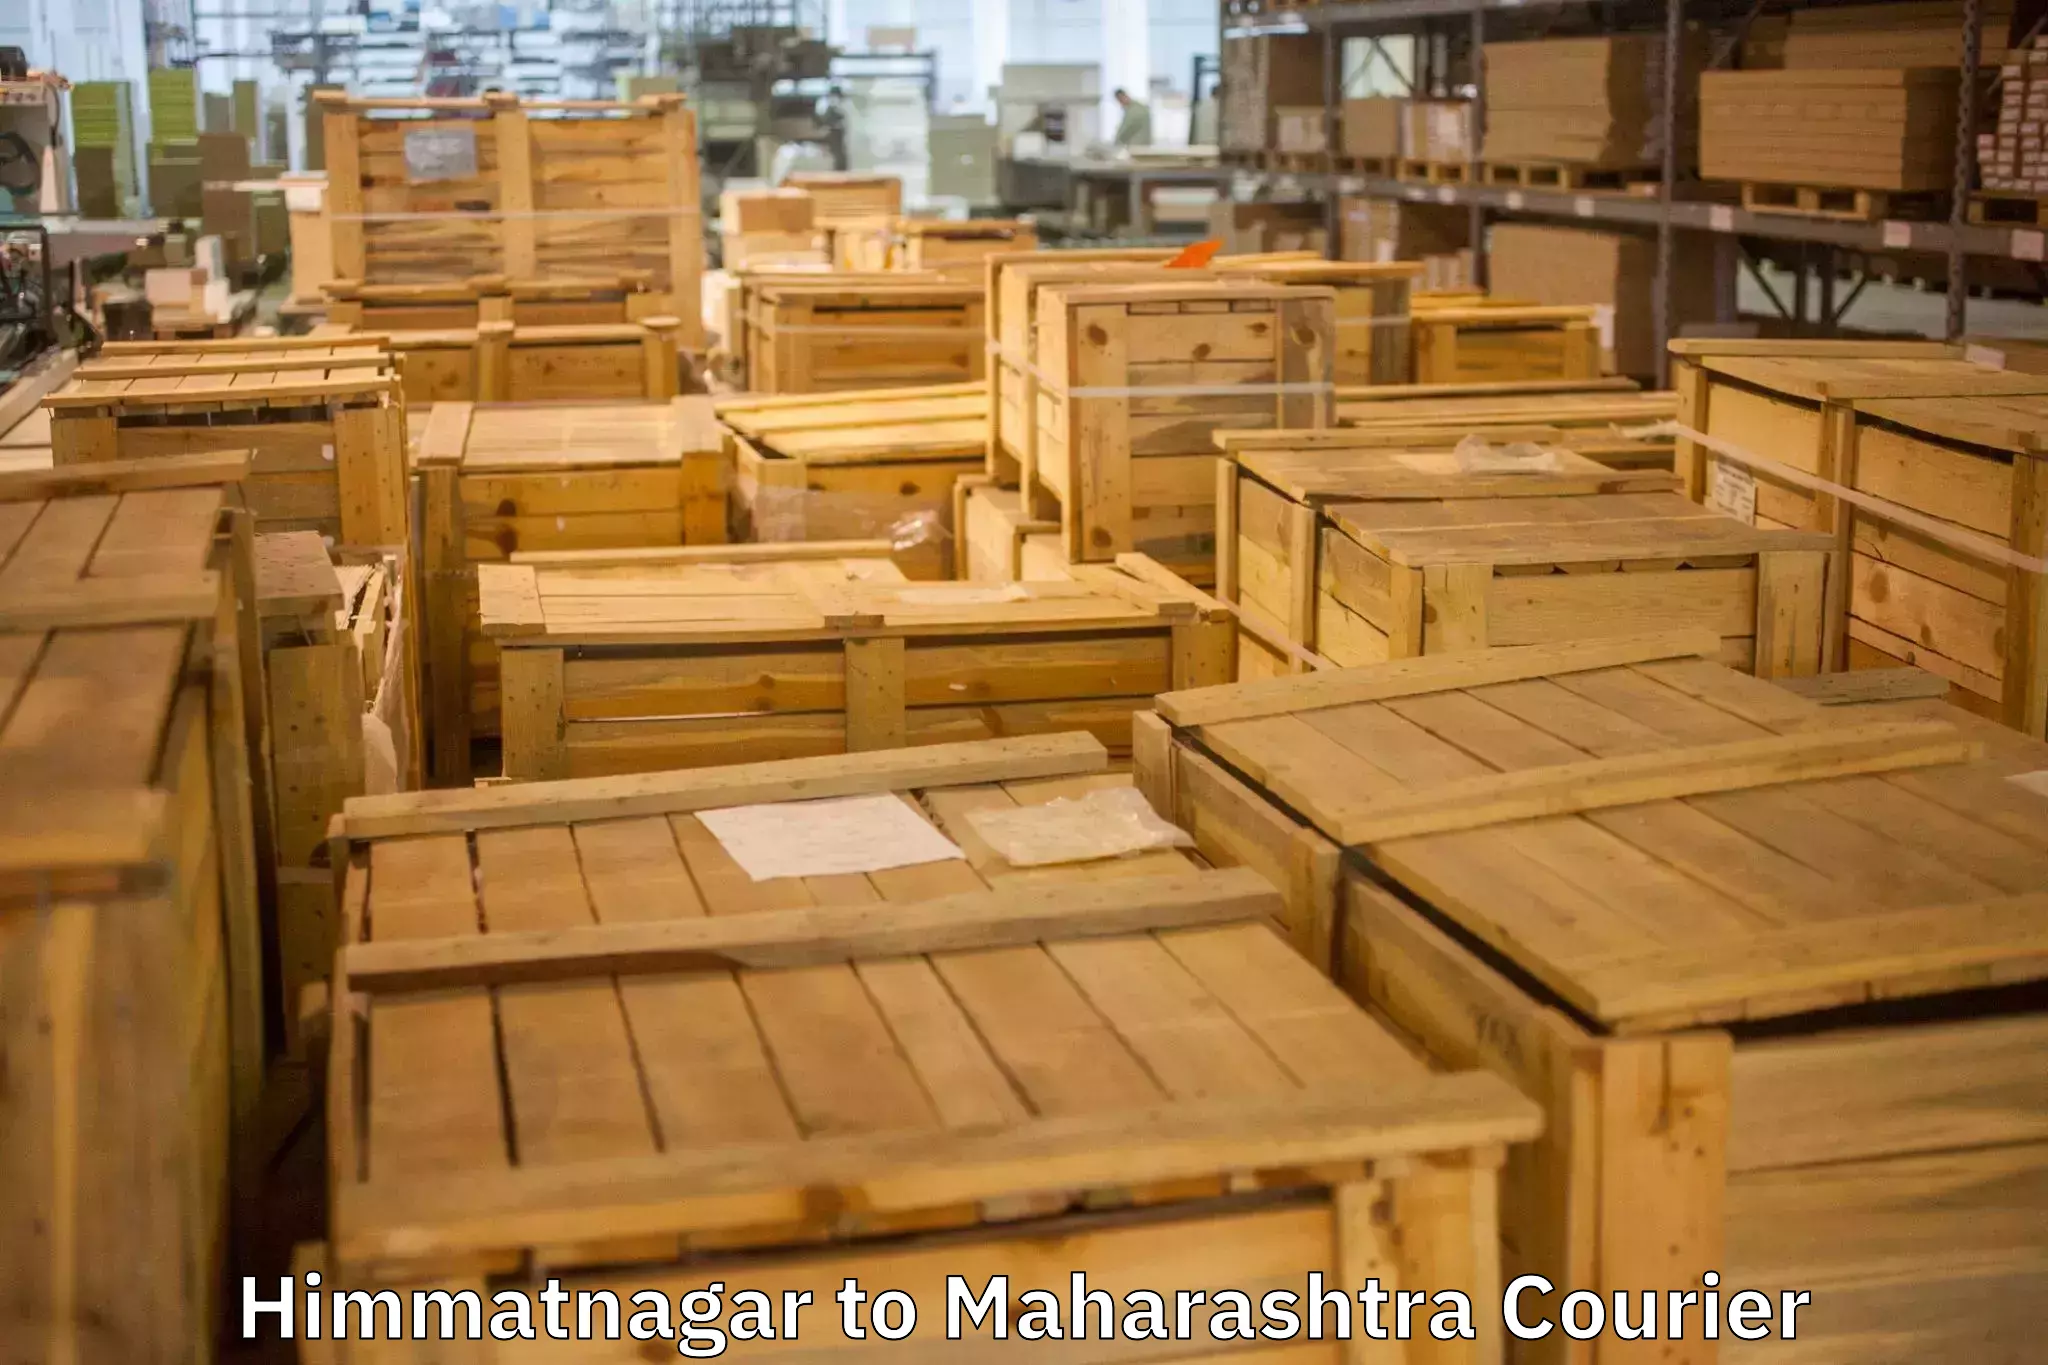 Expert goods movers Himmatnagar to Wagholi